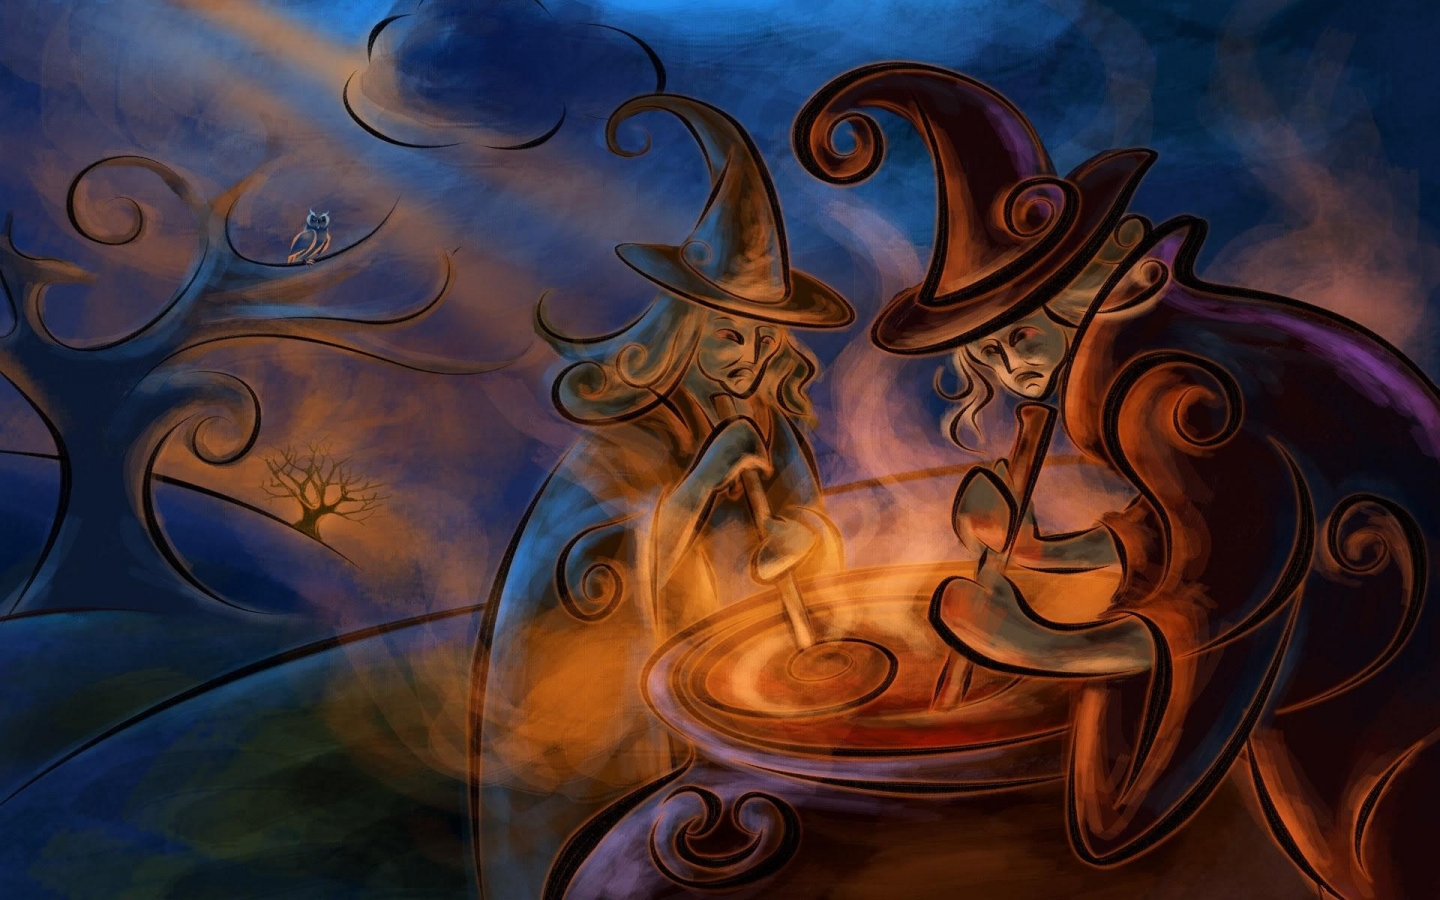 Nice Halloween Art Illustration for 1440 x 900 widescreen resolution